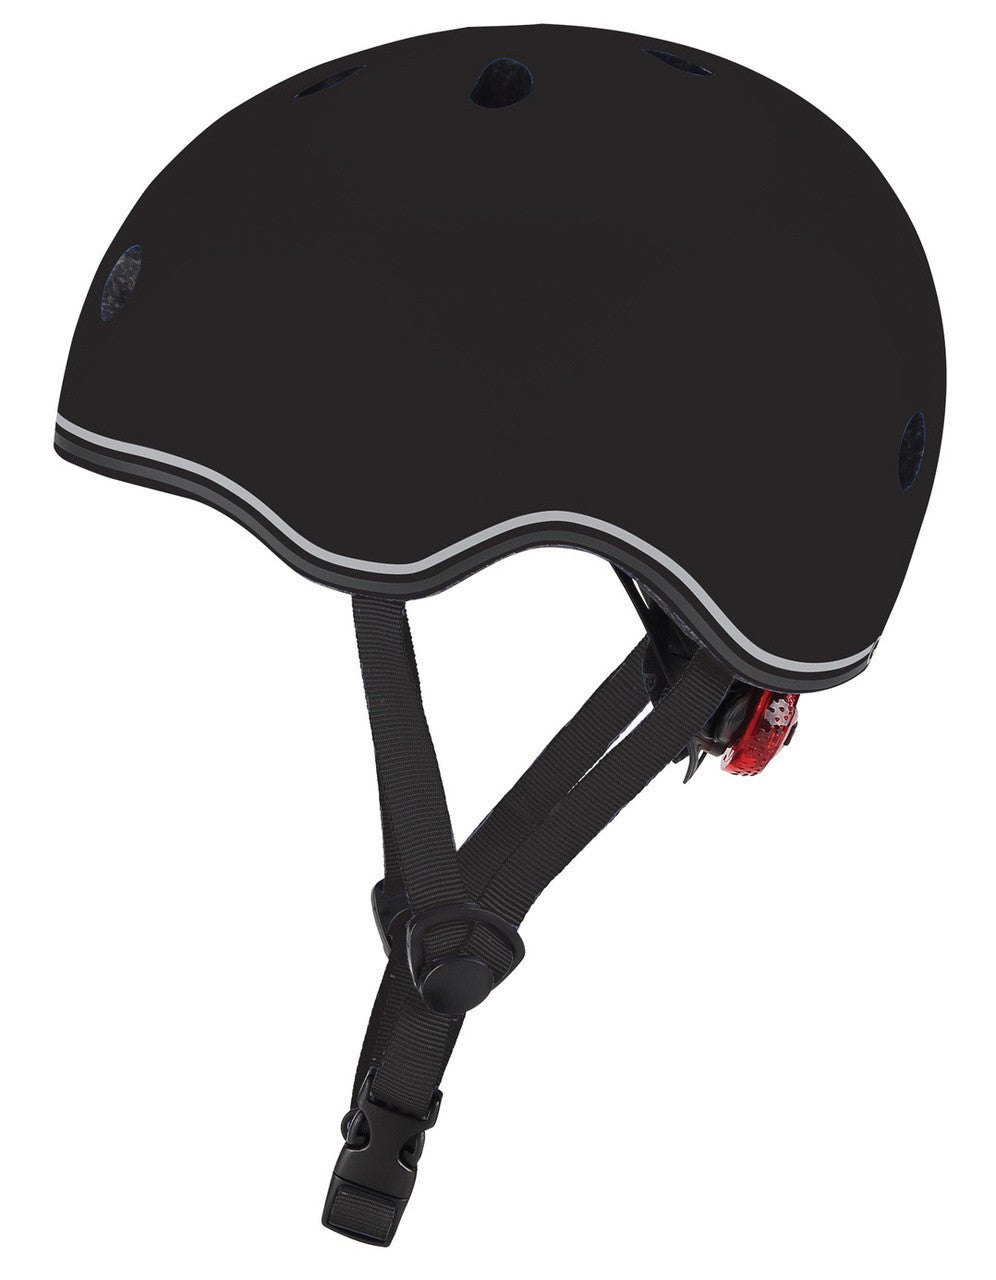 Globber Helmet - Black - Extra Small (46-51cm)